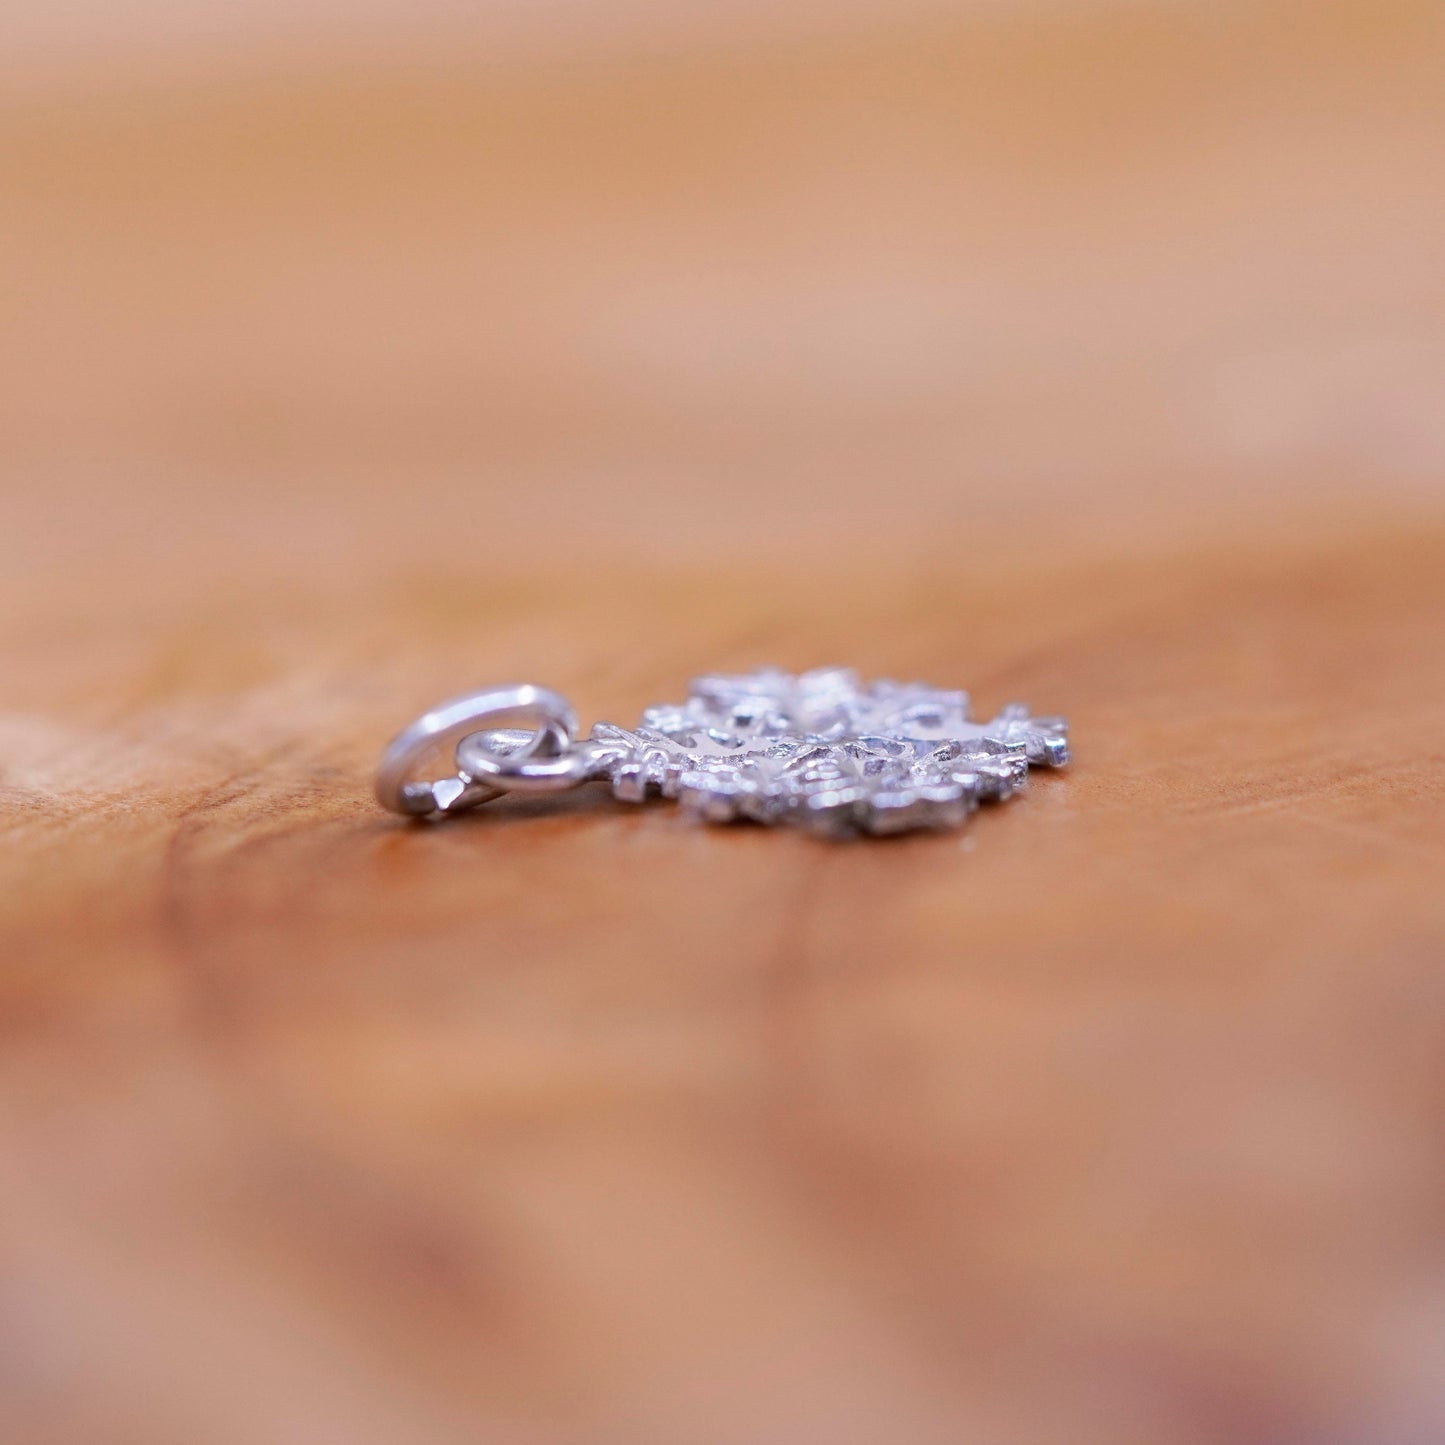 Vintage sterling 925 silver handmade snowflake charm pendant